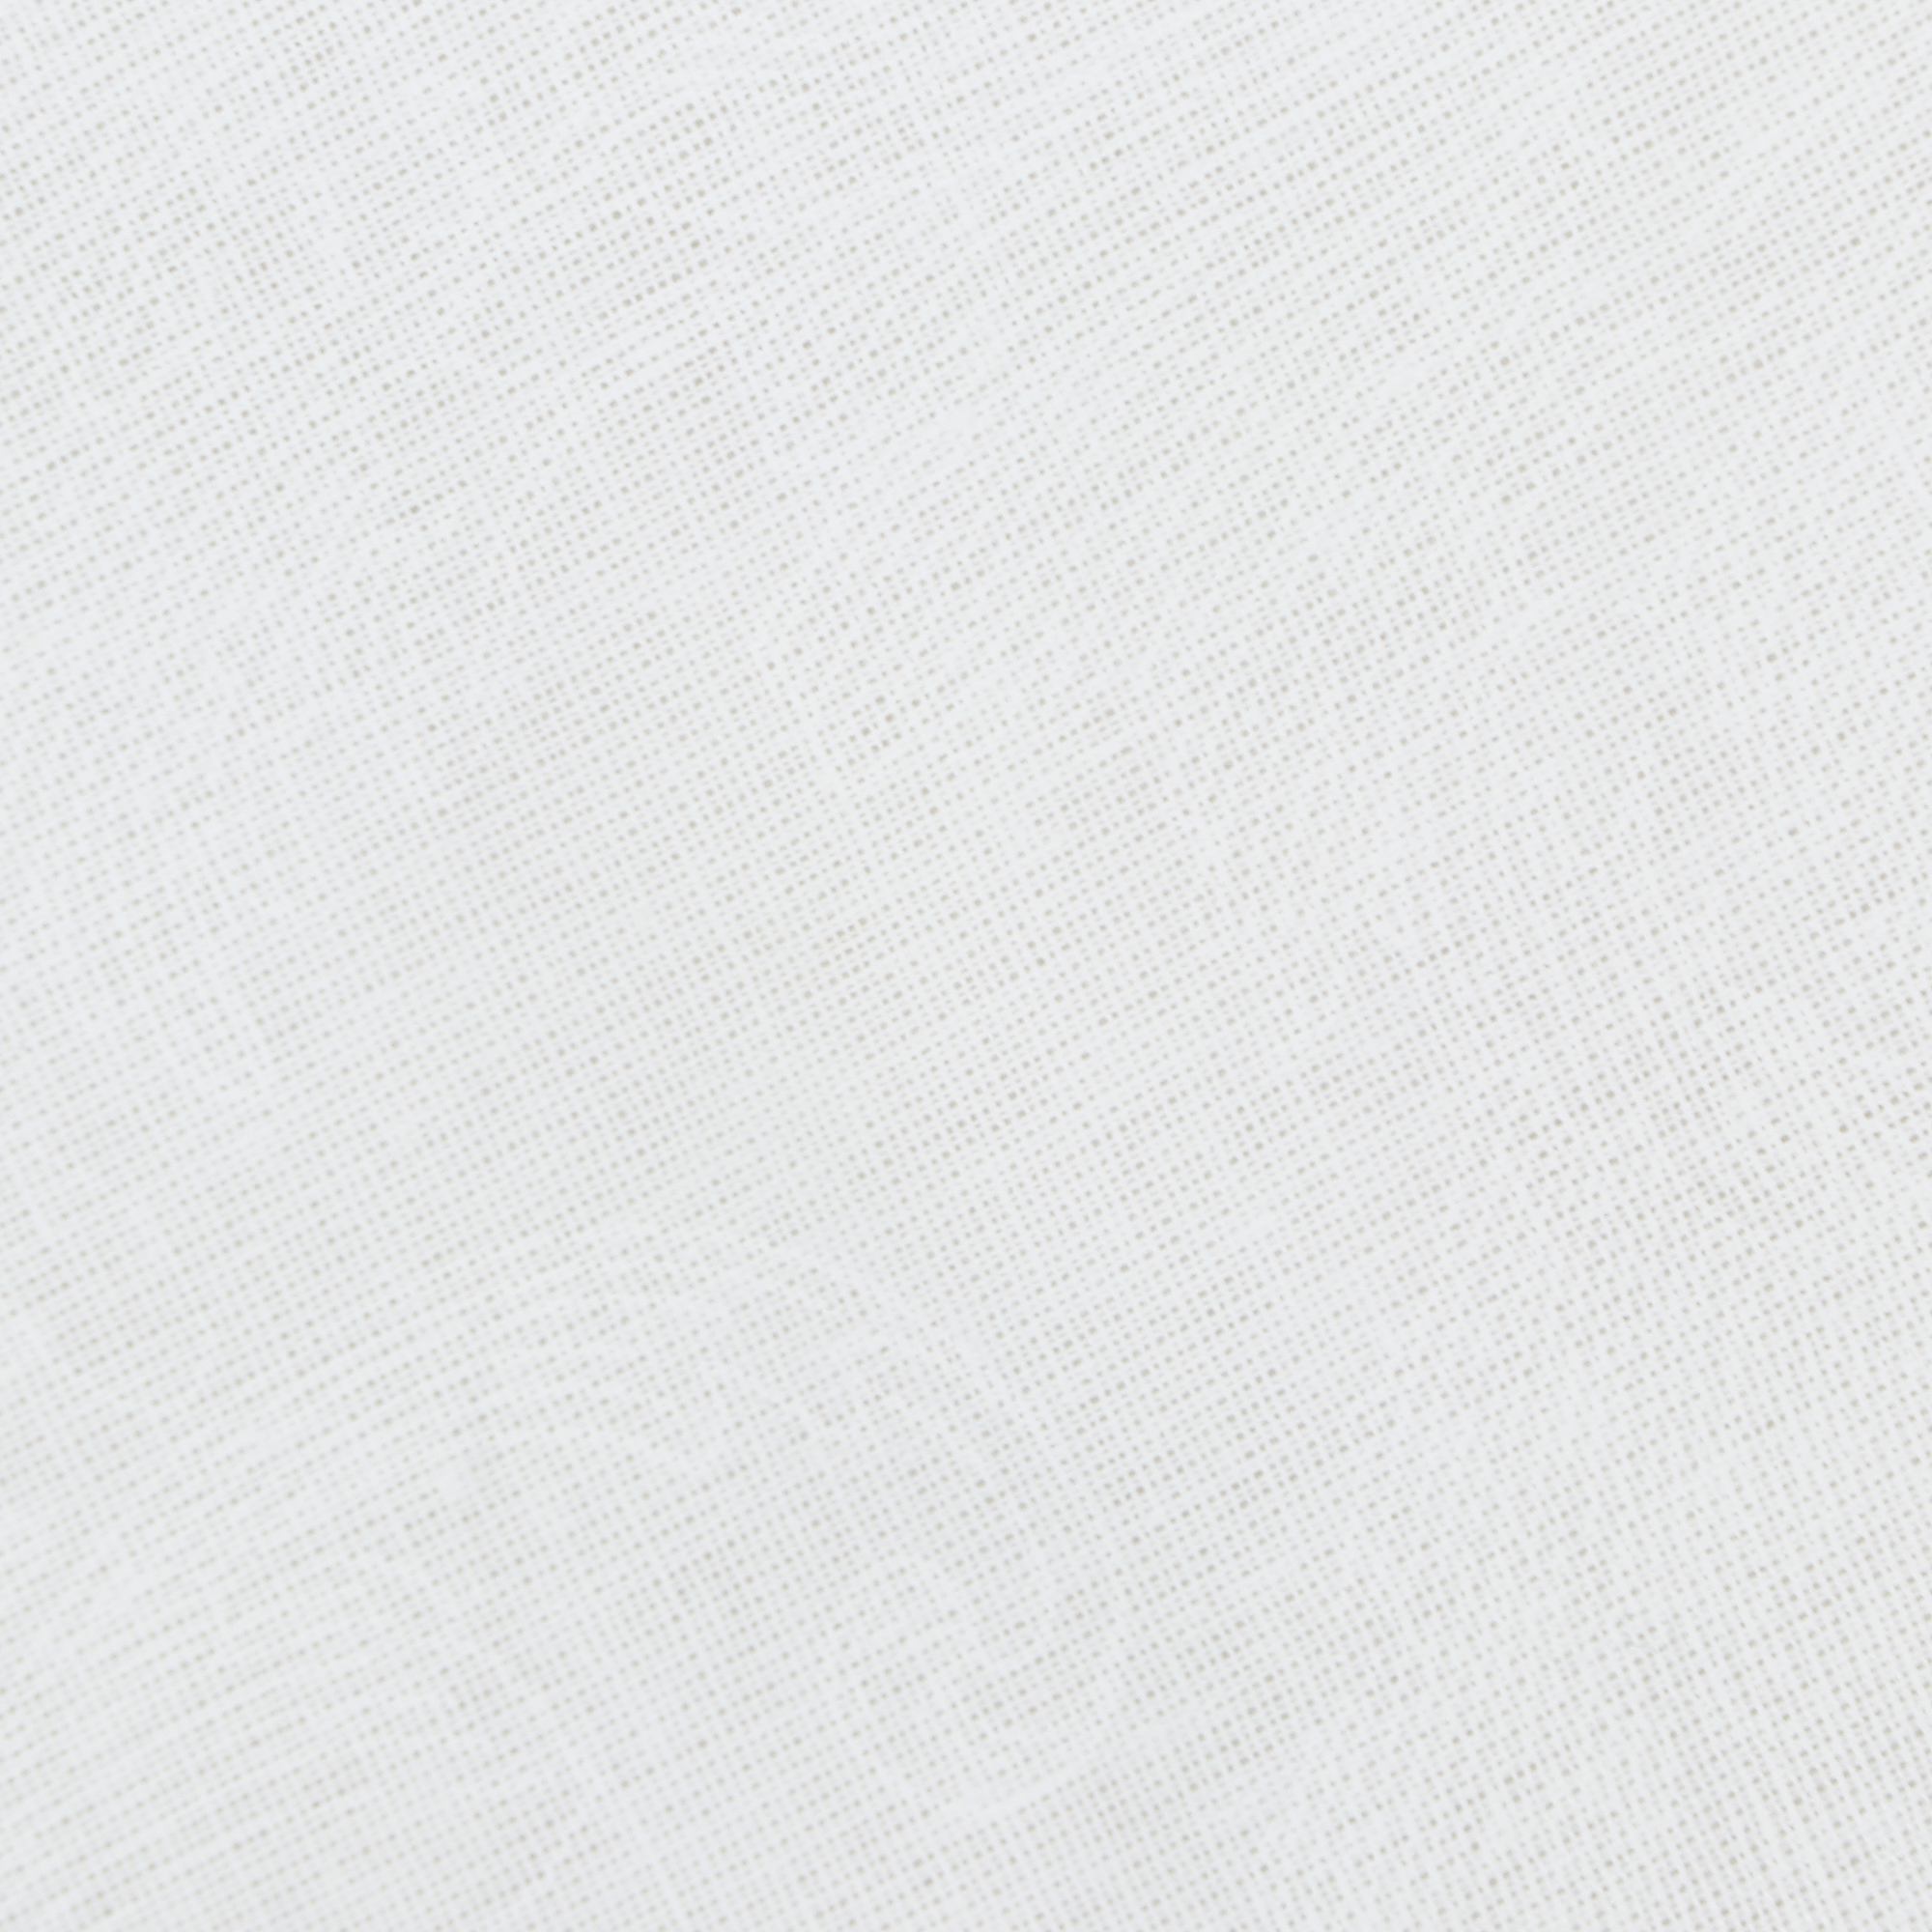 Одеяло Medsleep White Cloud белое 140х200 см, цвет белый - фото 2